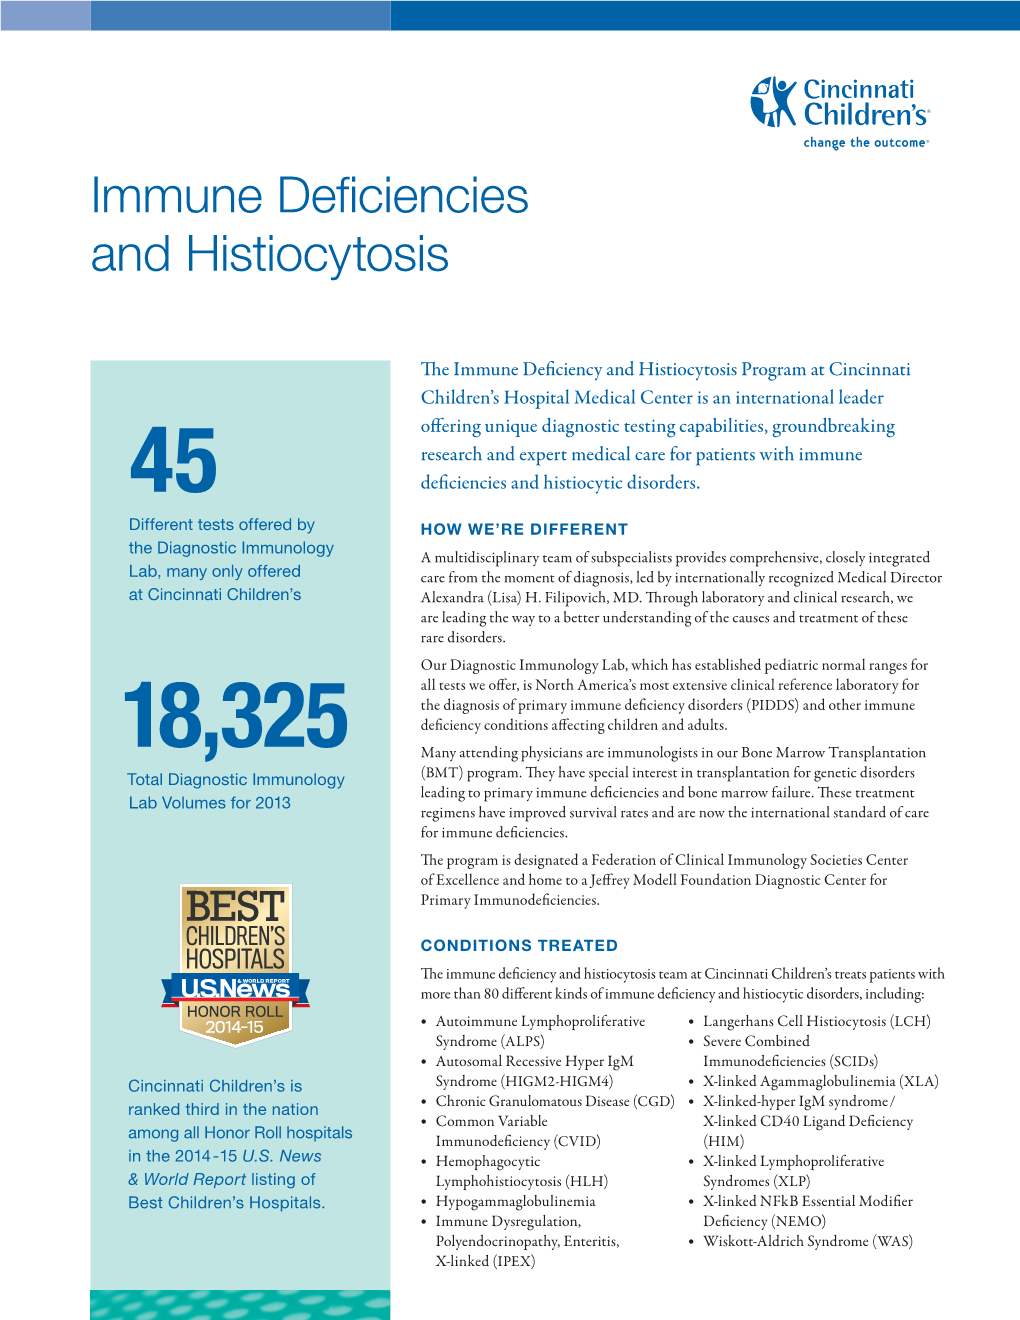 Immune Deficiencies and Histiocytosis